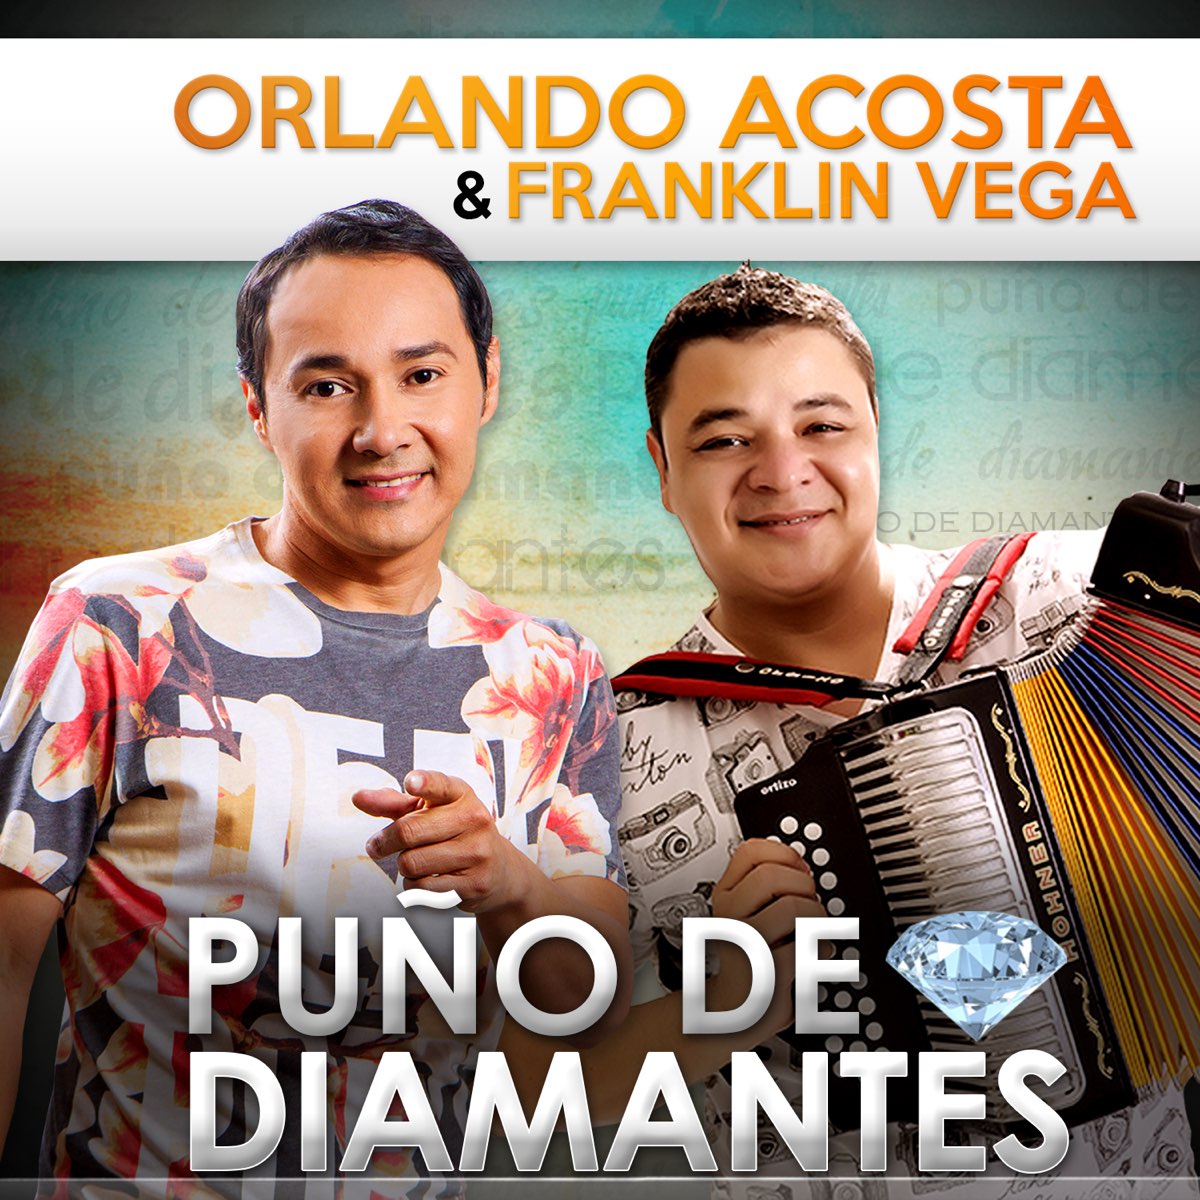 Gángster Subir longitud Puño de Diamantes - Single by Orlando Acosta & Franklin Vega on Apple Music